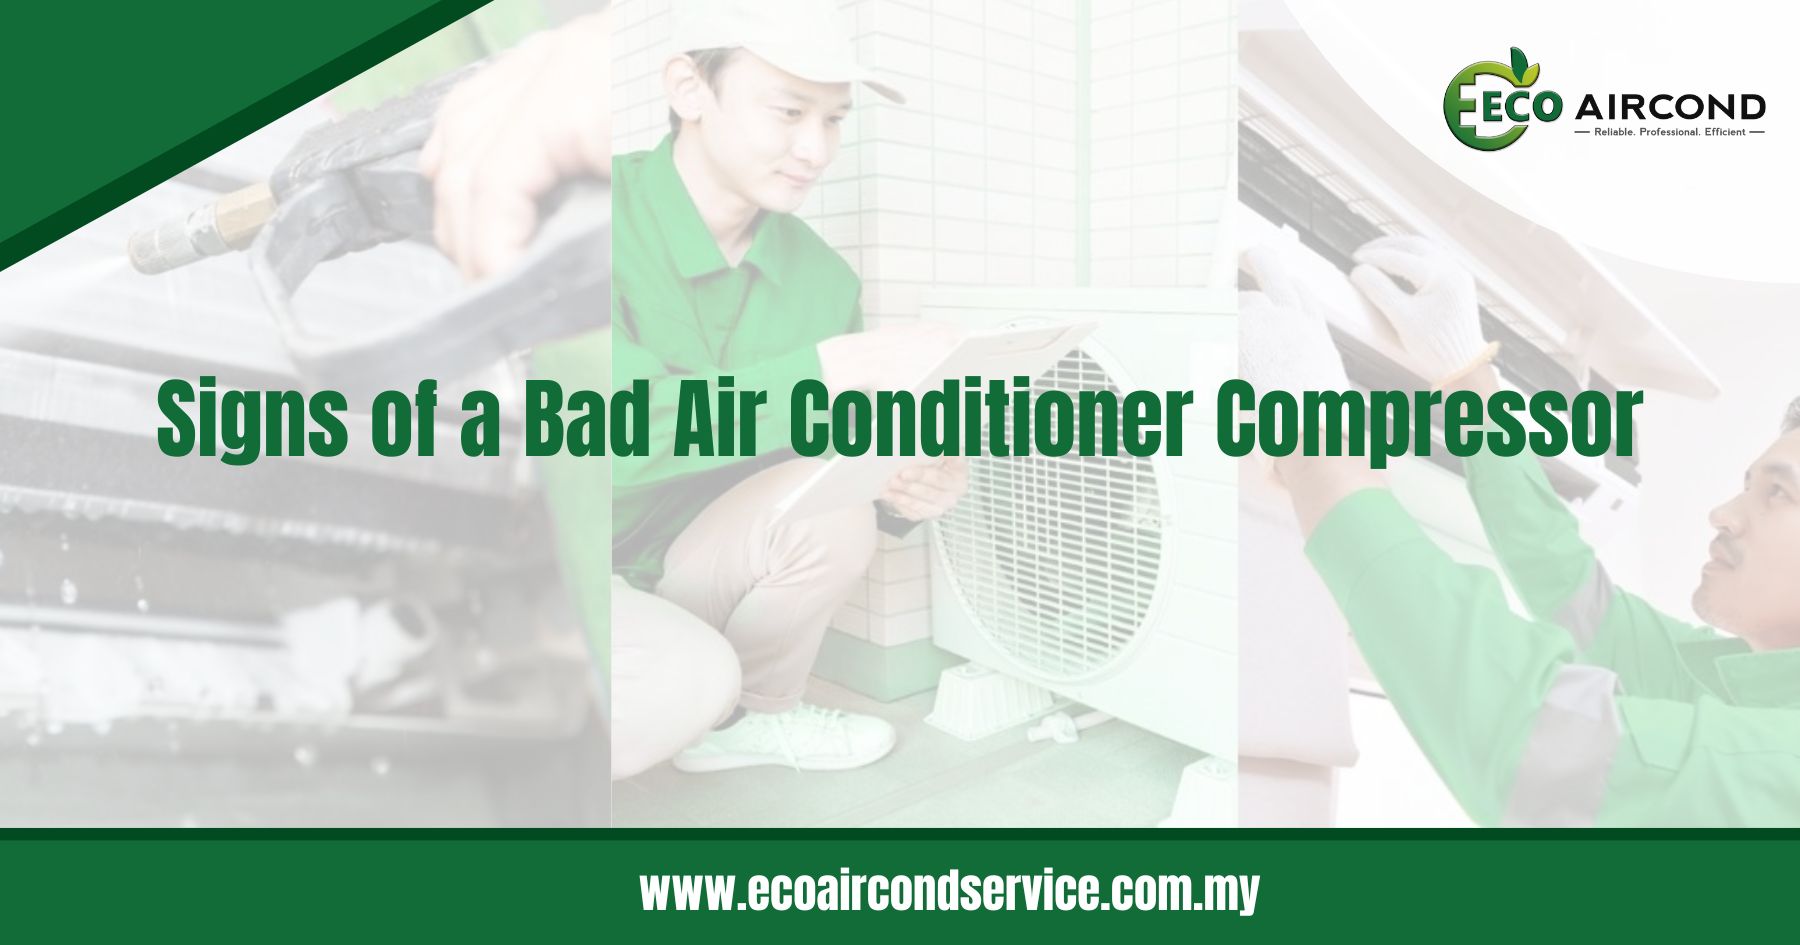 Signs of a Bad Air Conditioner Compressor